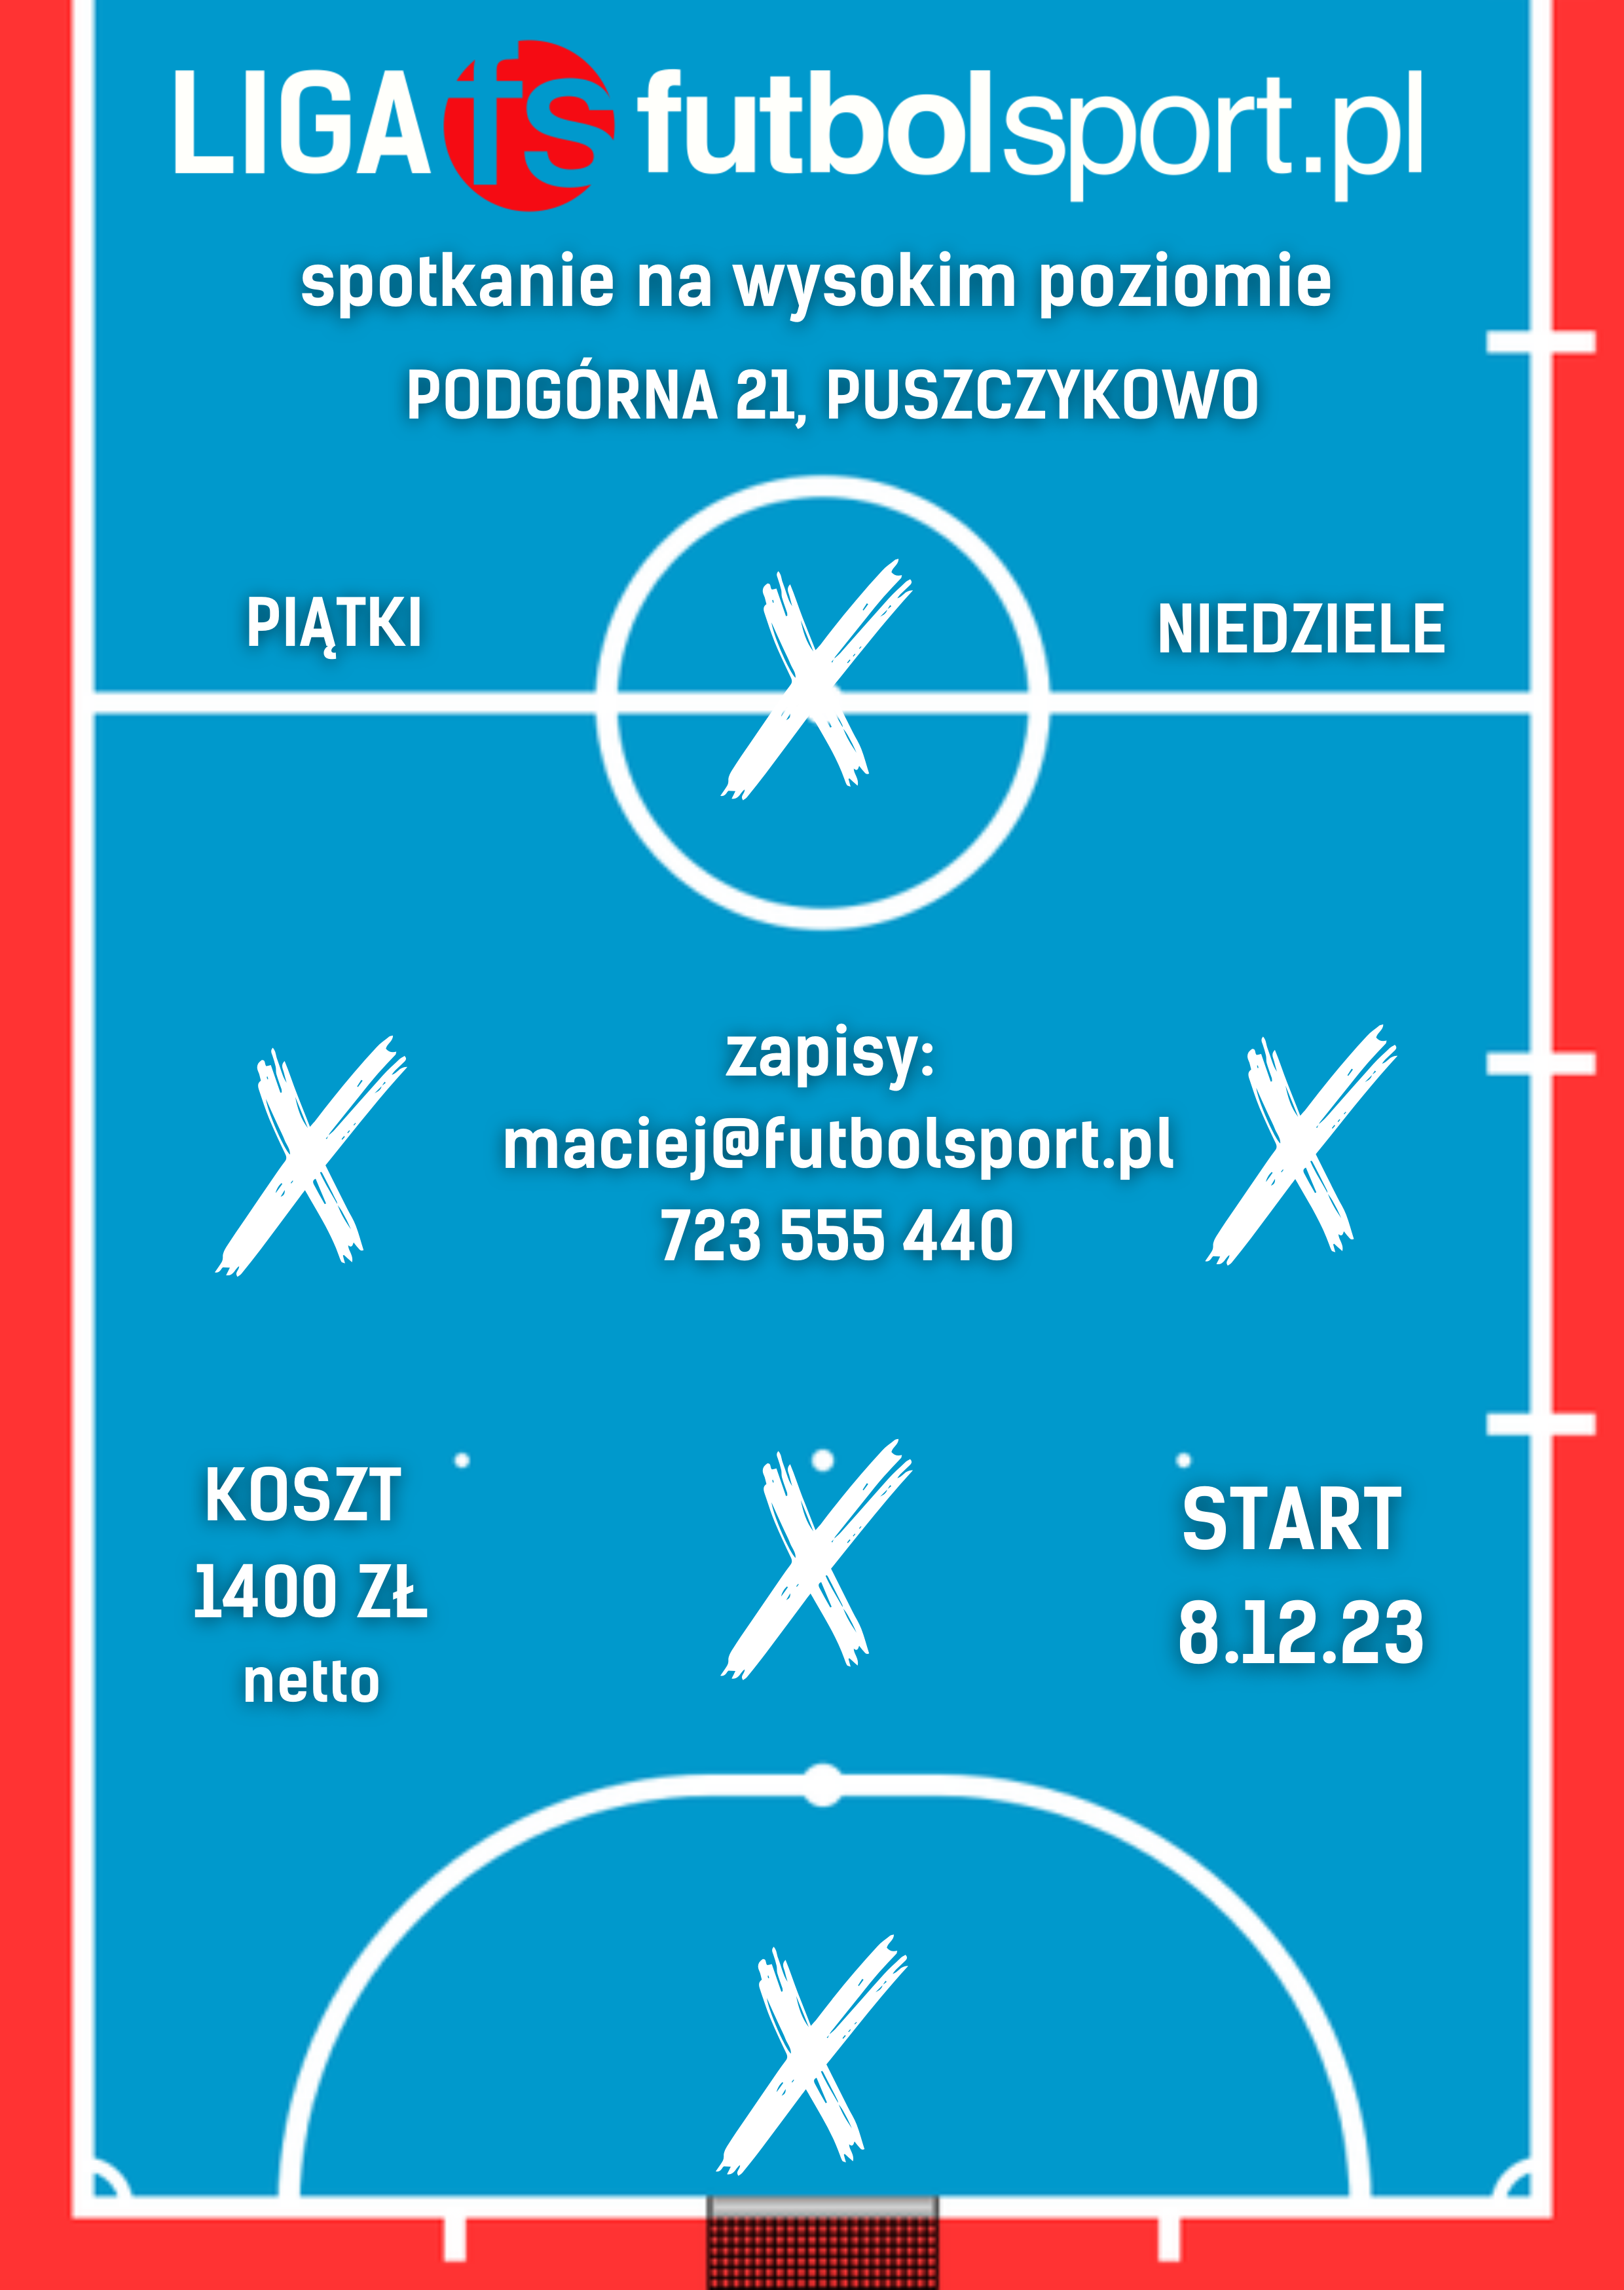 13 grudnia start ligi halowej futbolsport.pl